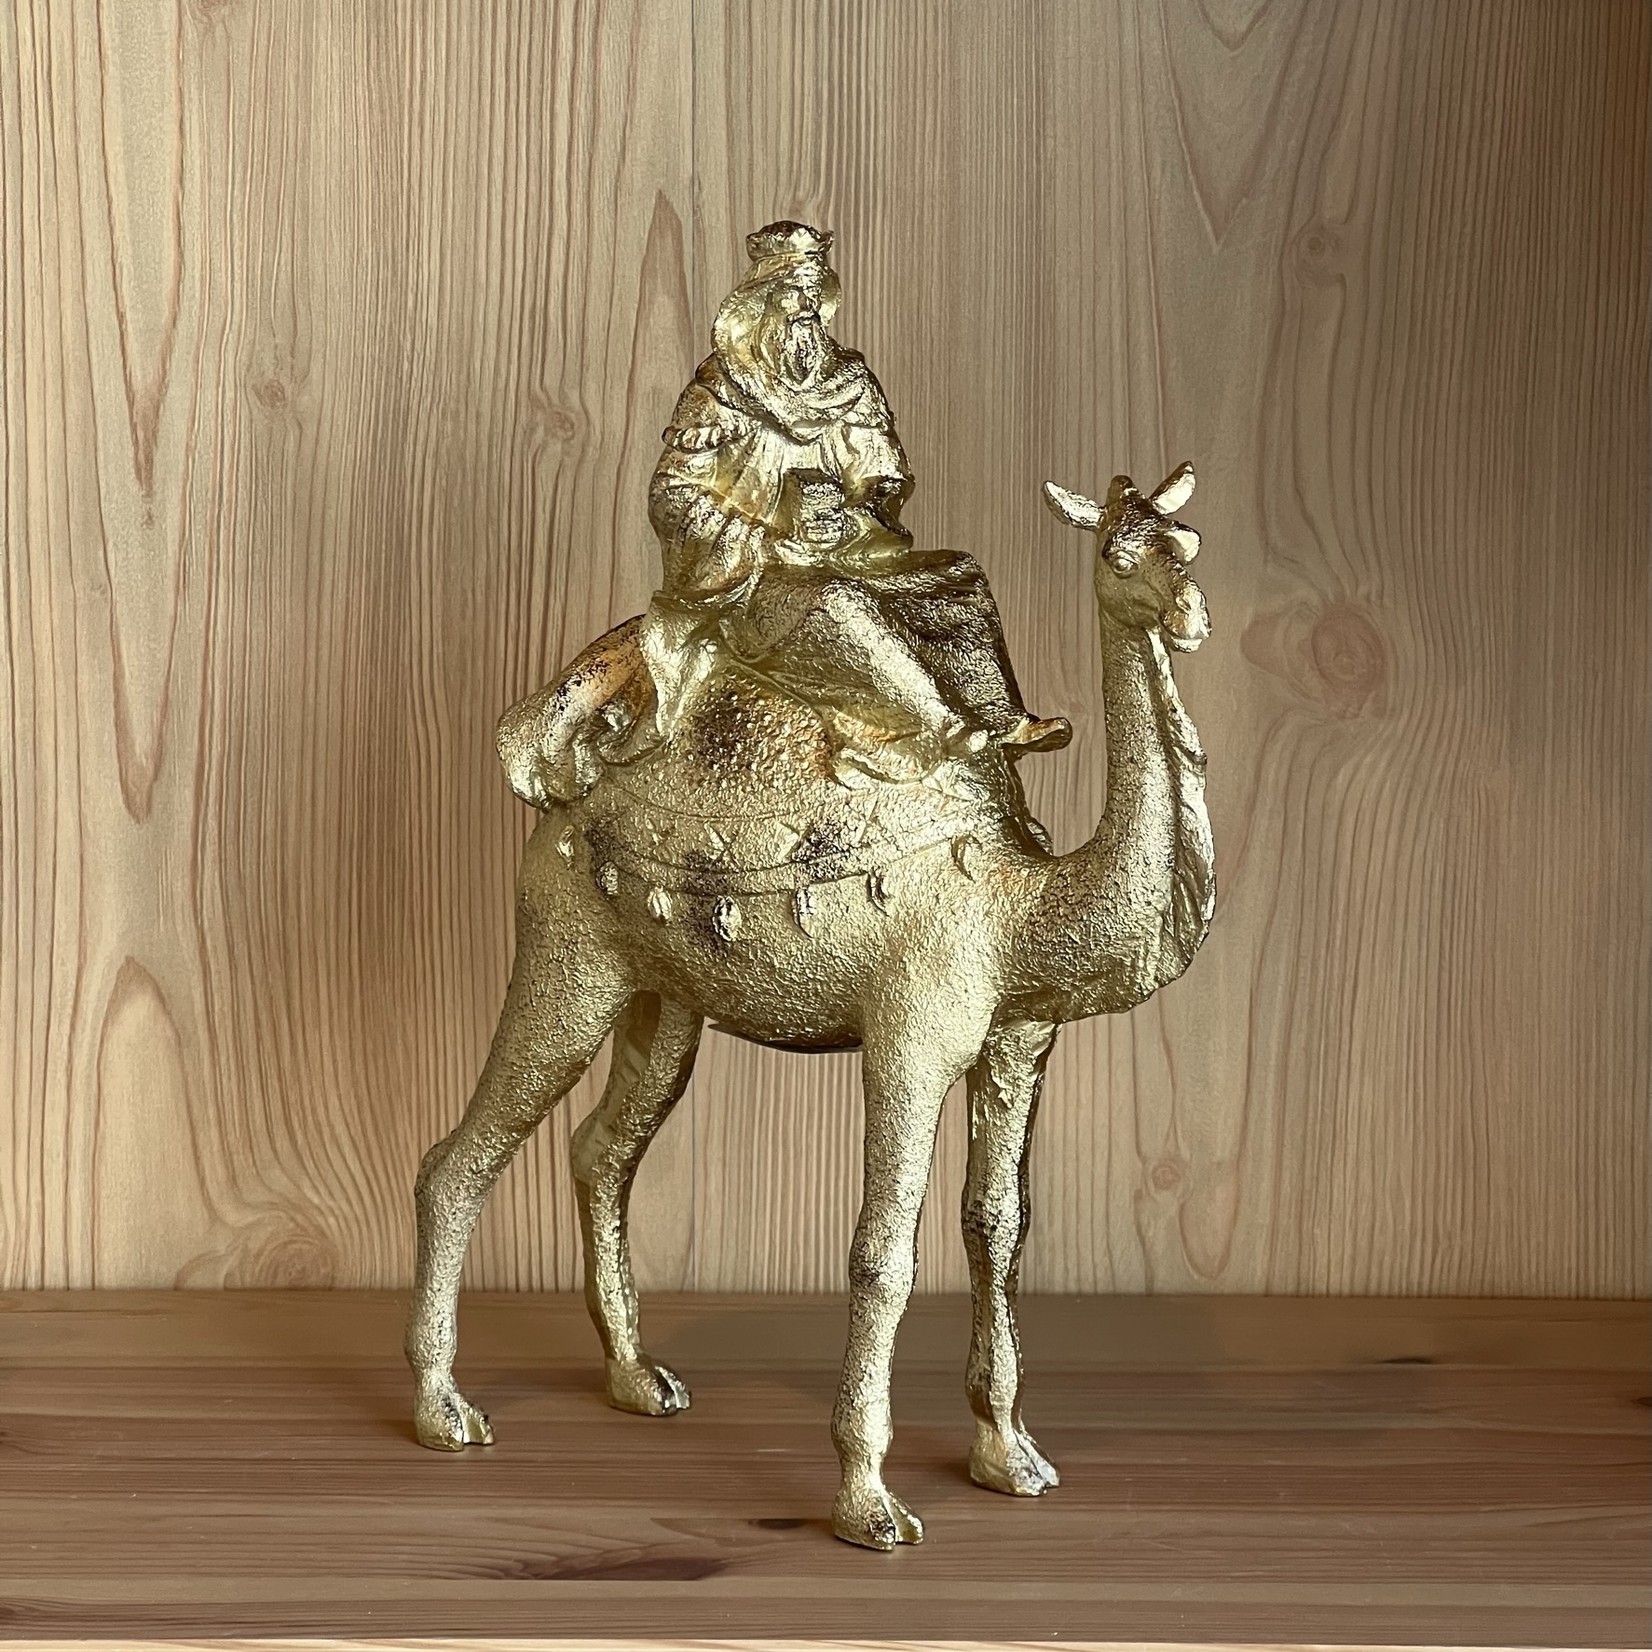 Wiseman on Camel